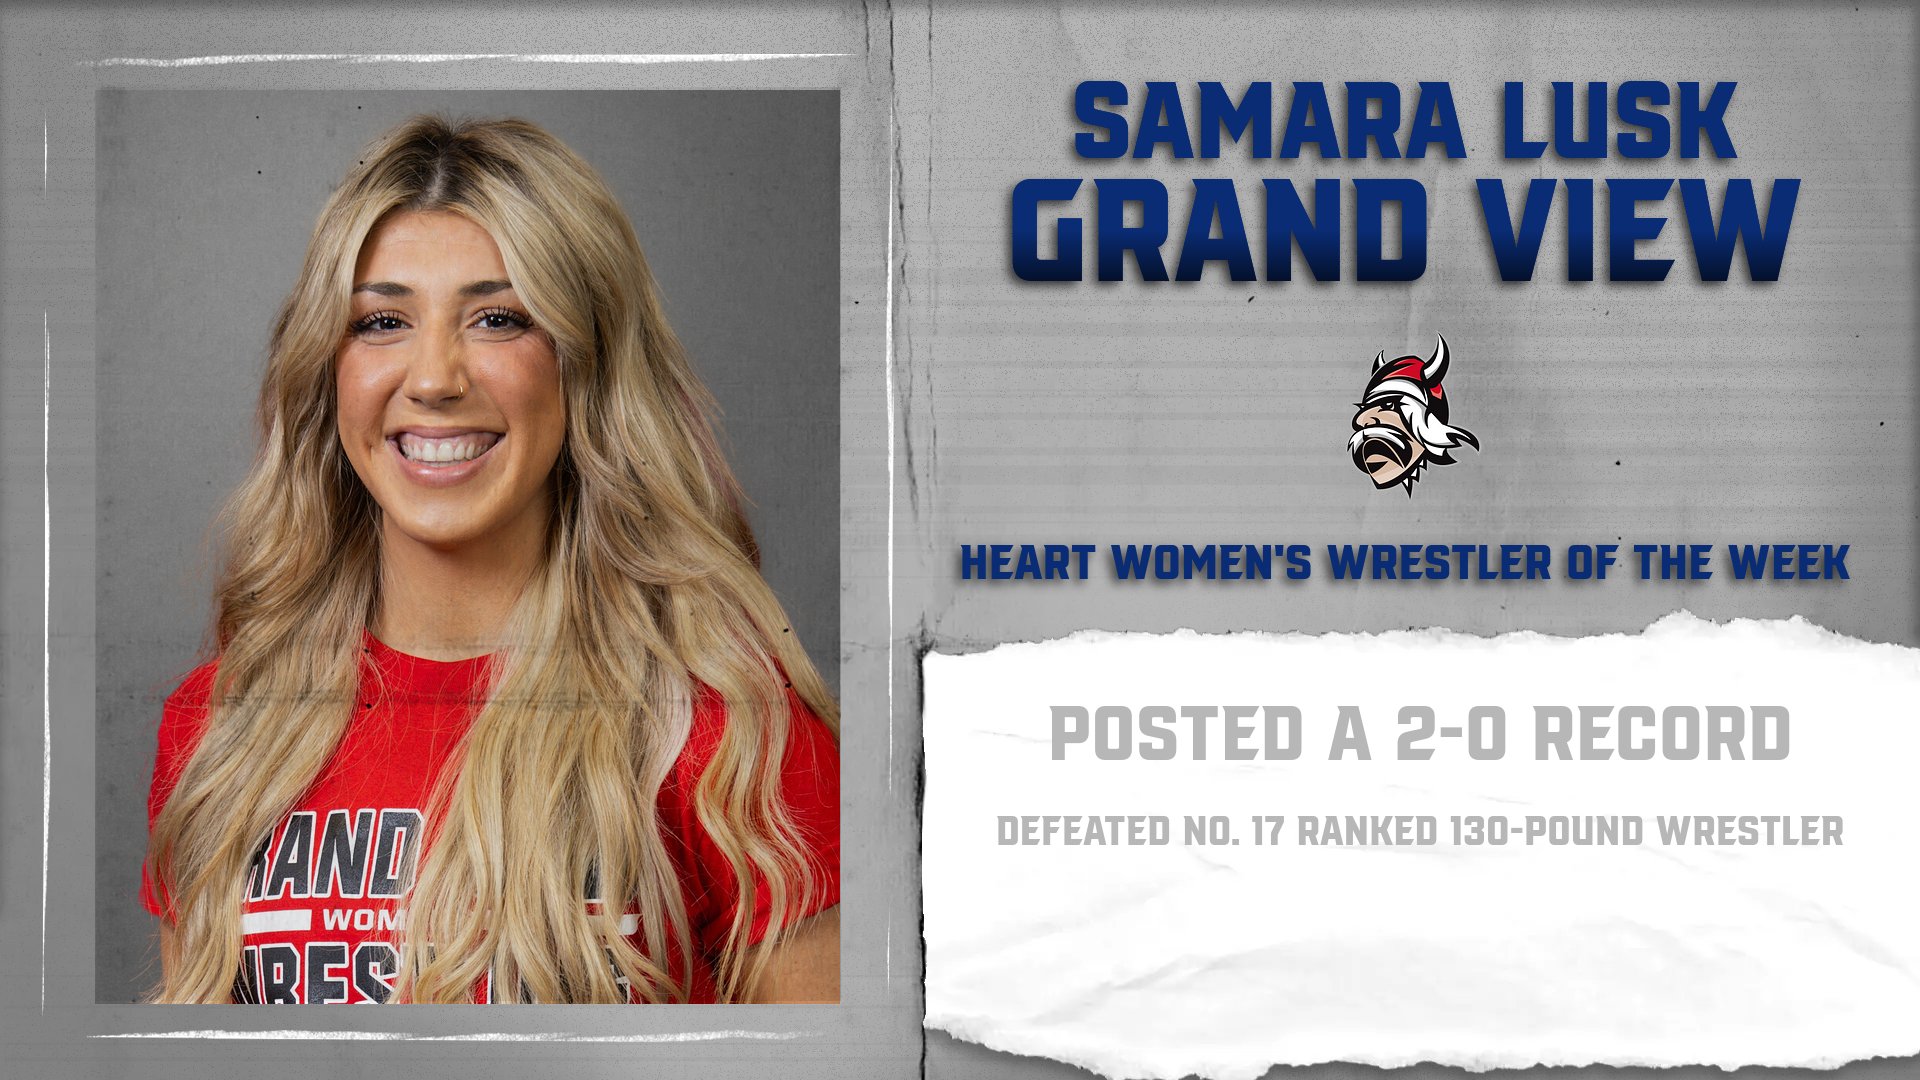 Grand View’s Samara Lusk Selected Heart Women’s Wrestler of the Week